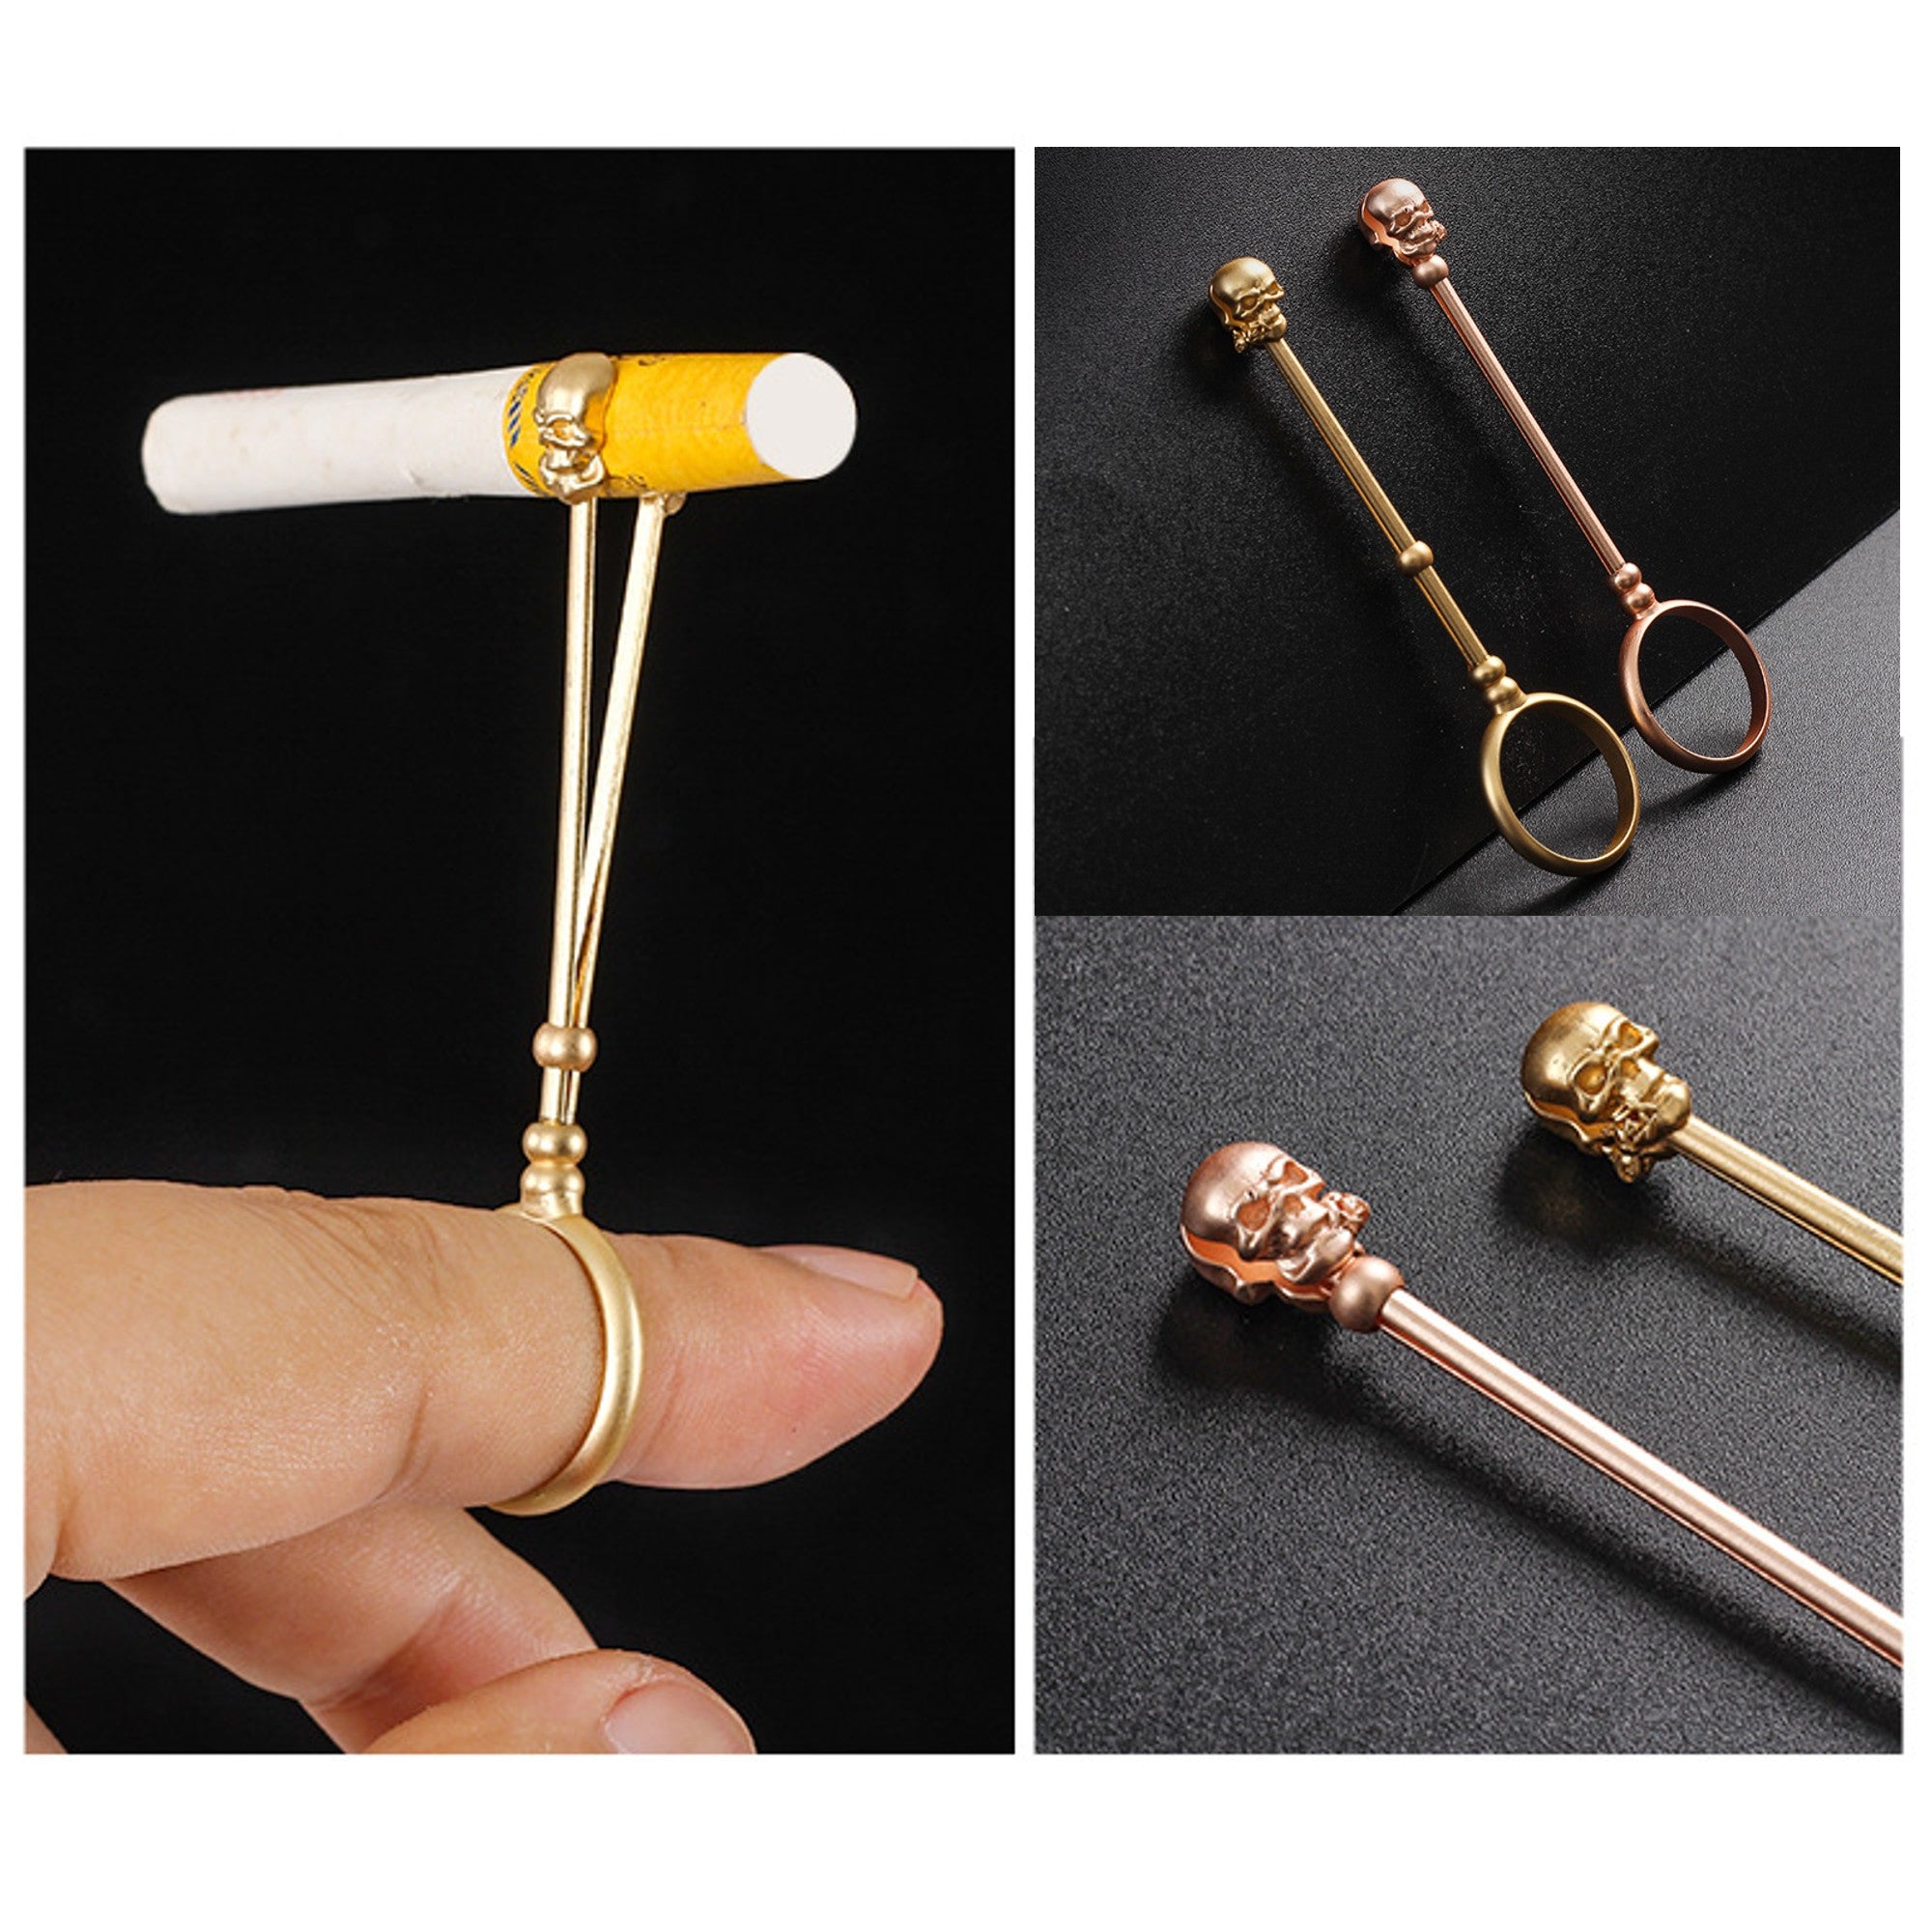 Smoking Accessories Metal Ring Holder Practical Portable Cigarette Holder  Finger Holder Cigarette Holder Clip Skull From Cleanfoot_elitestore, $2.06